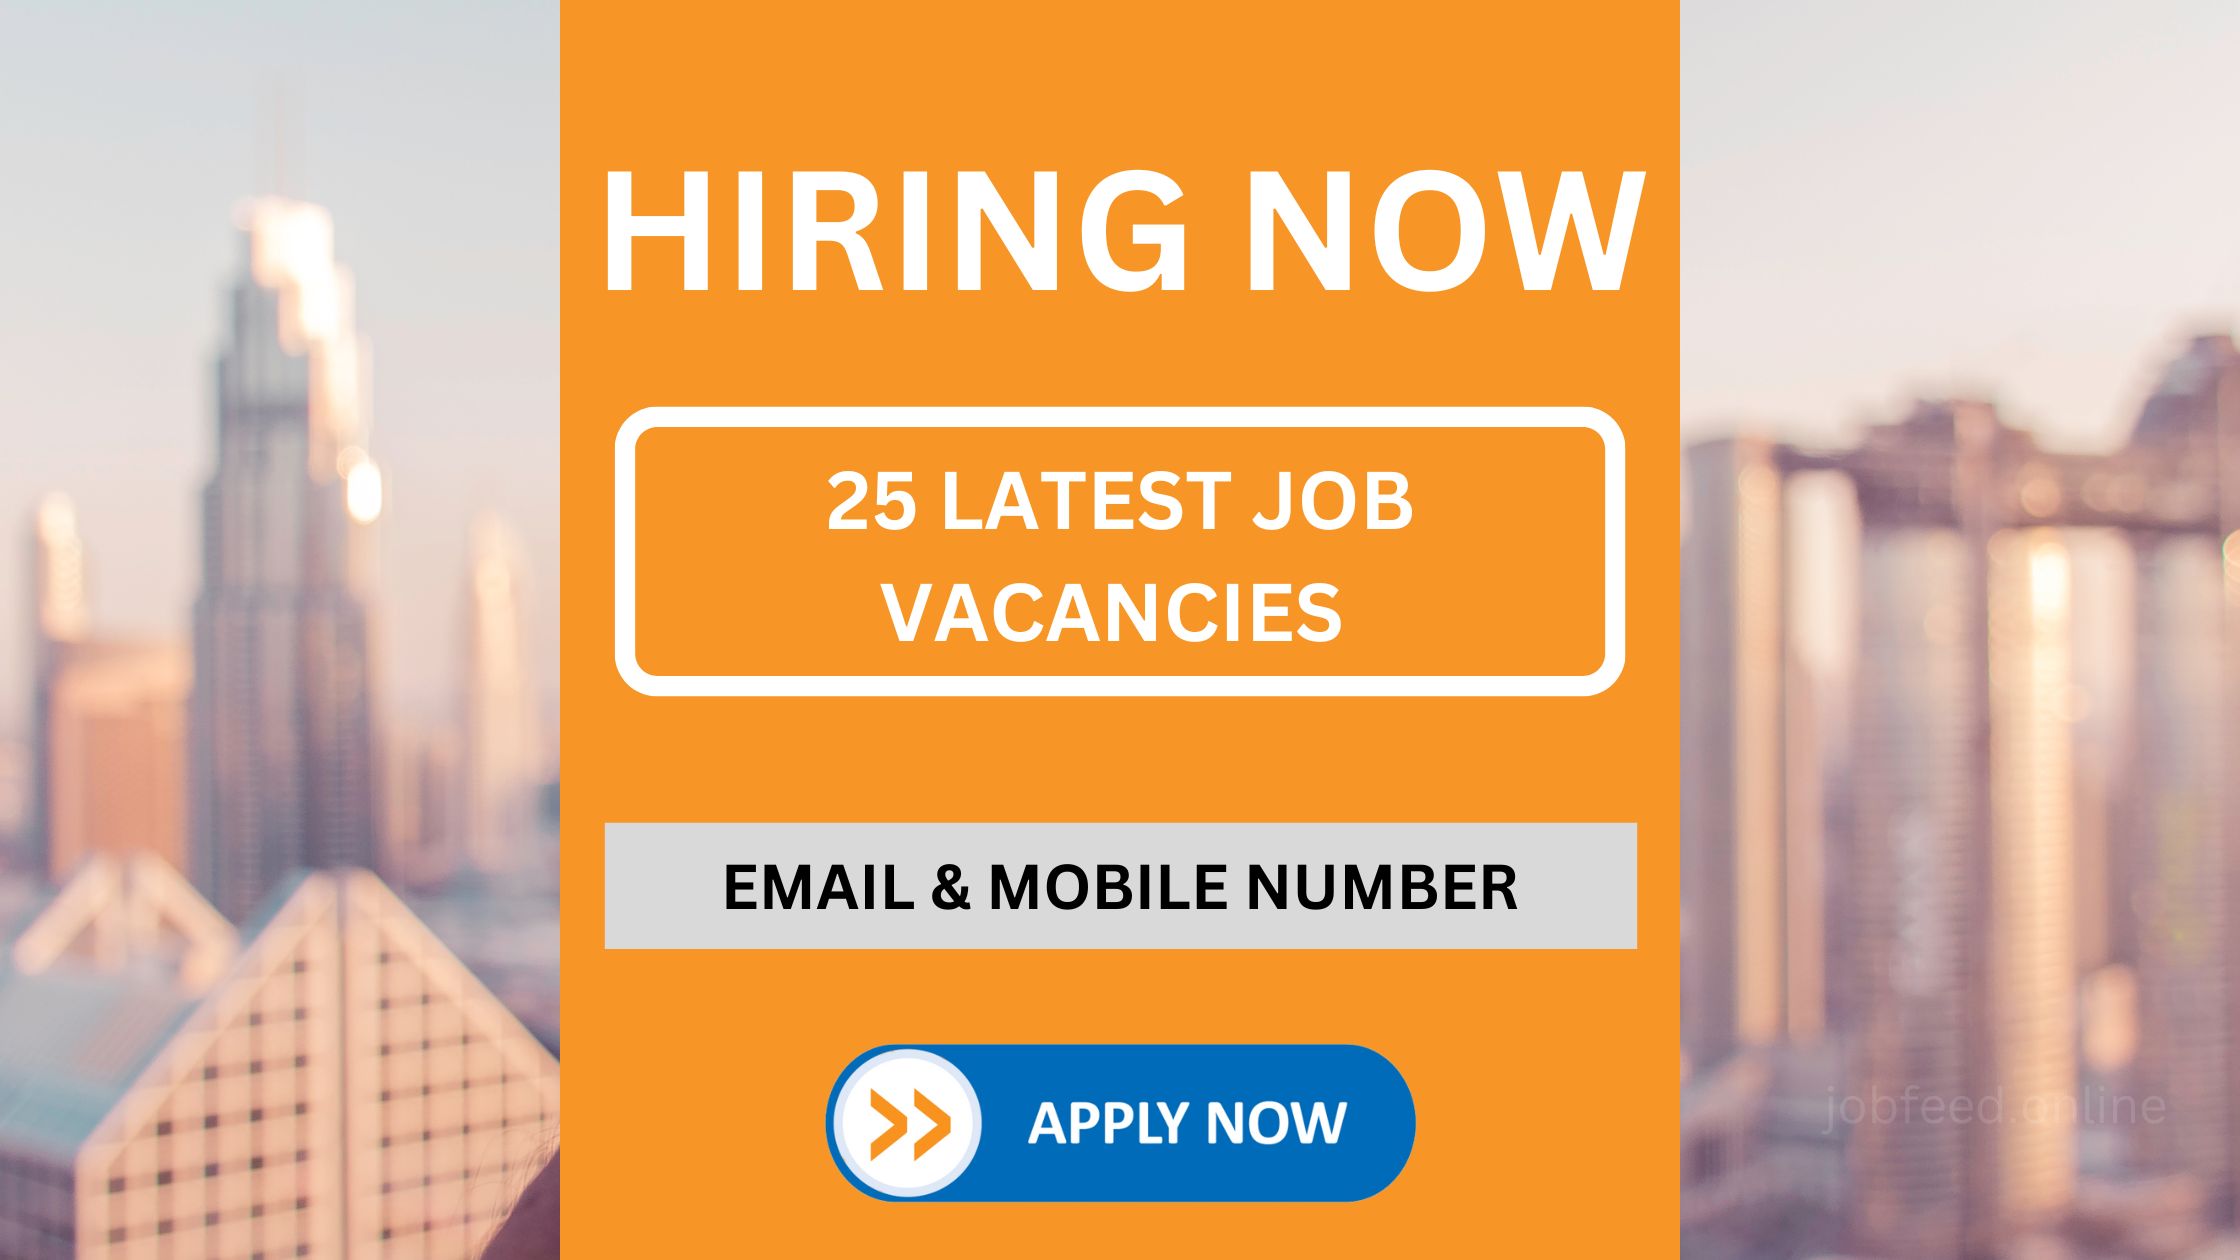 Latest Job Vacancies in UAE